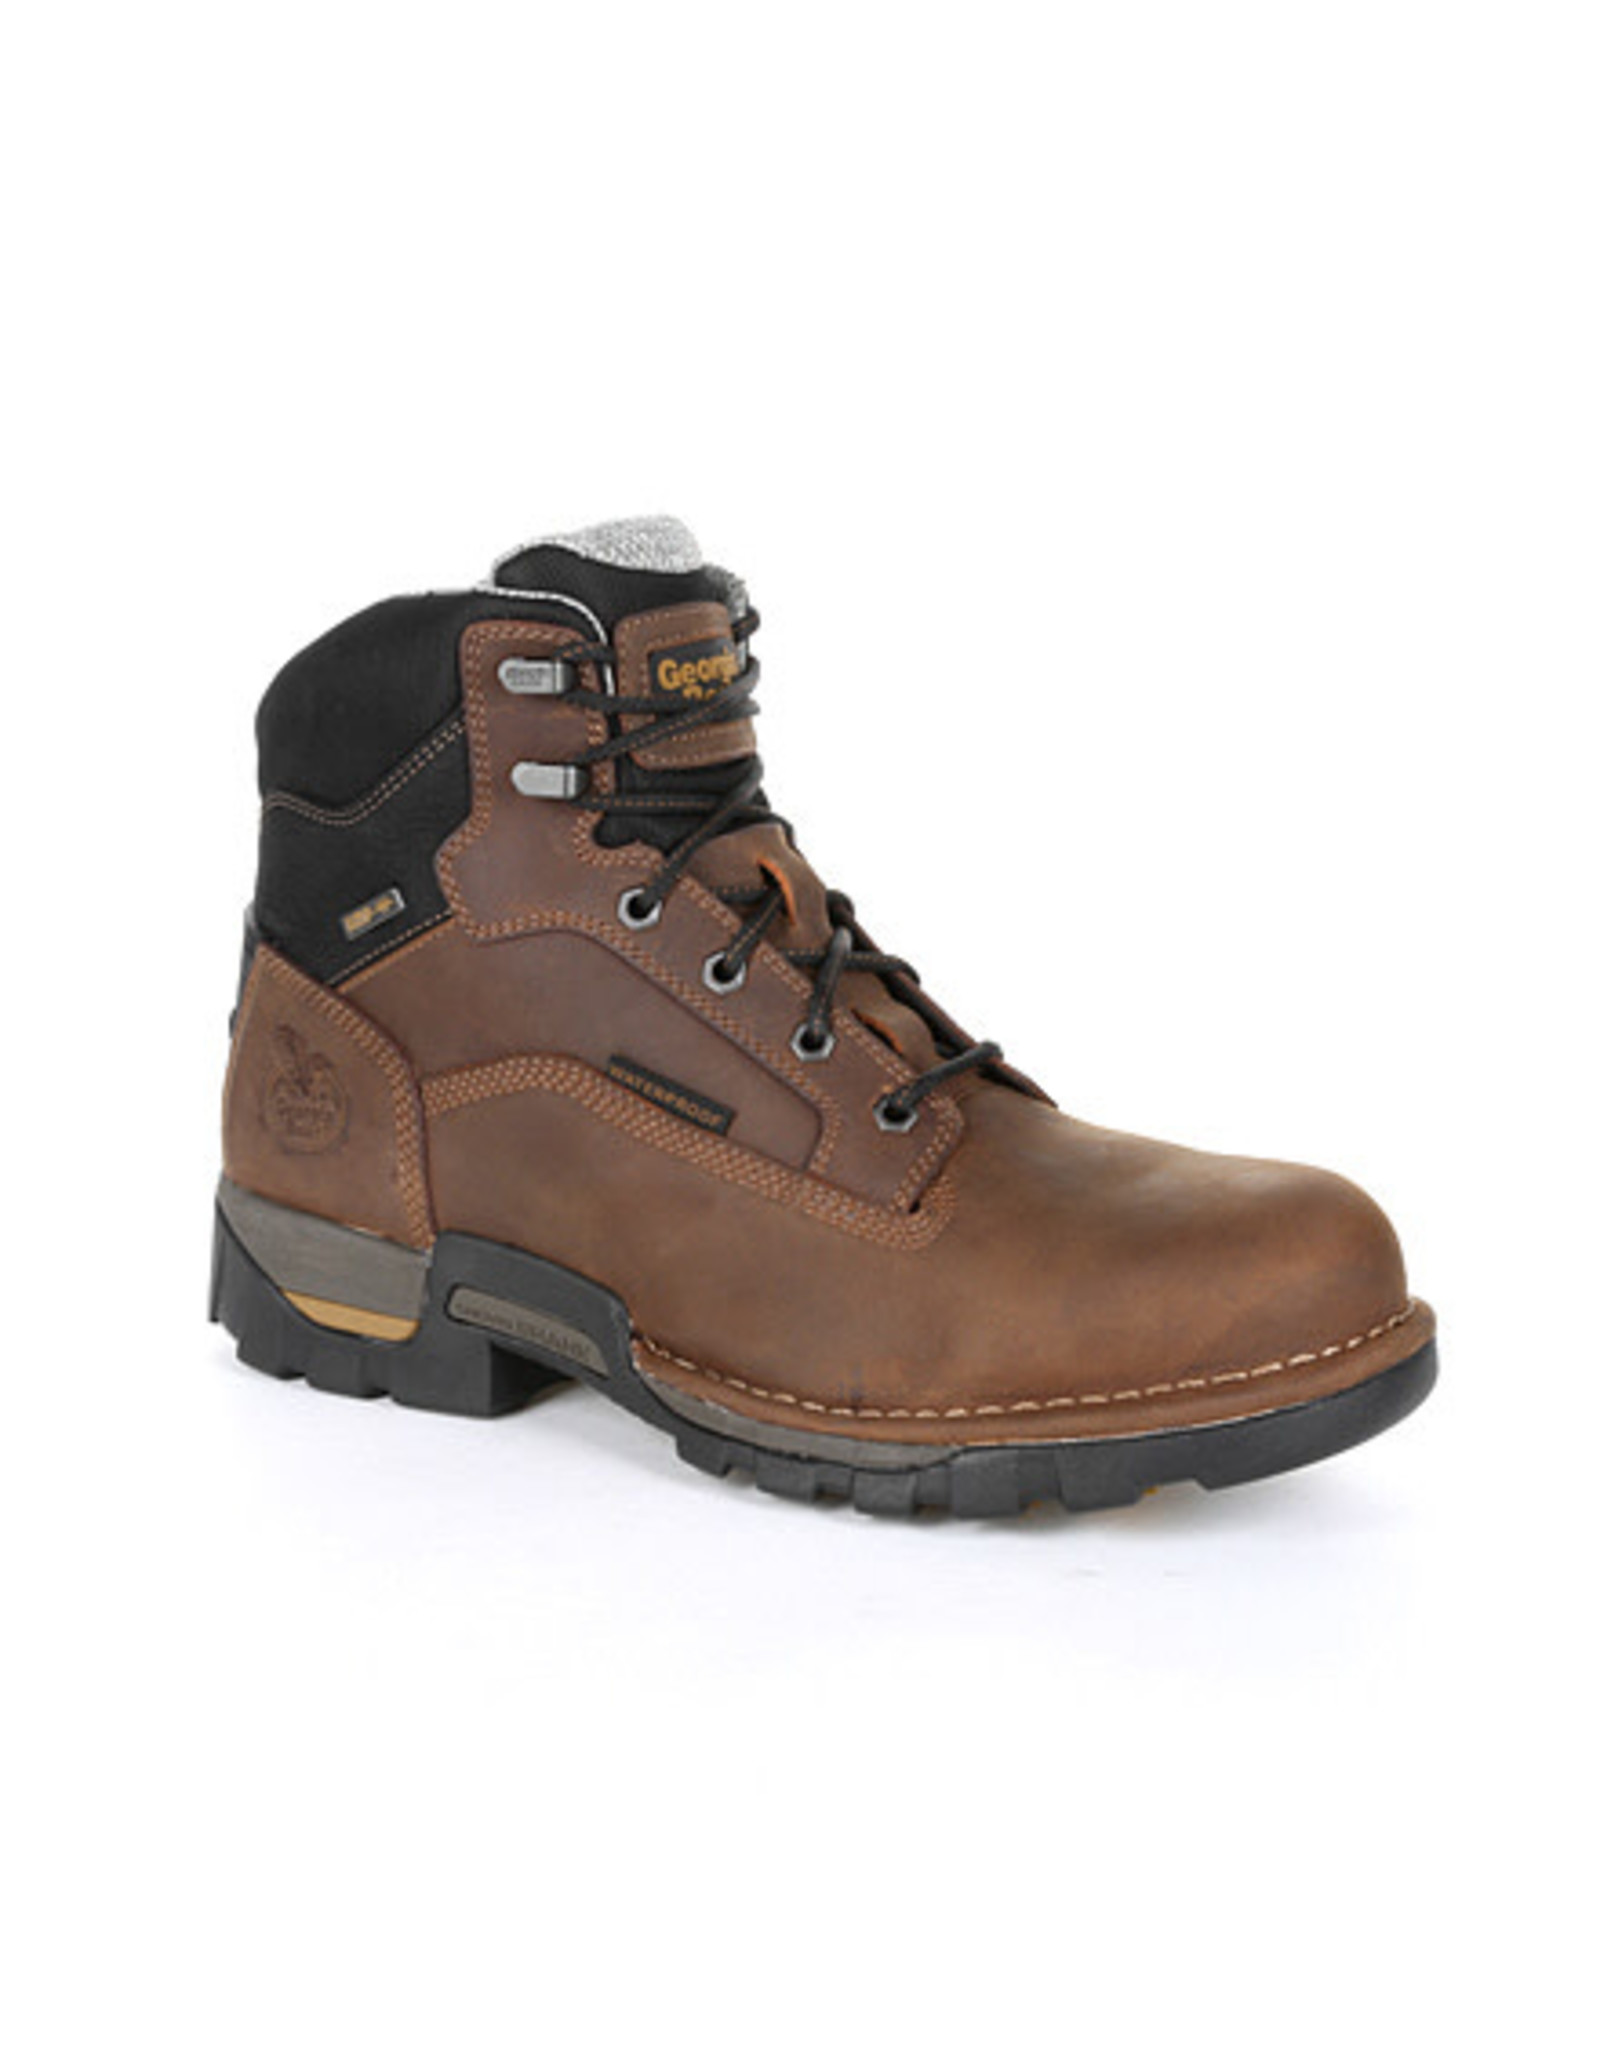 Georgia Men's Eagle One GB00313 6” Waterproof Steel Toe Work Boots